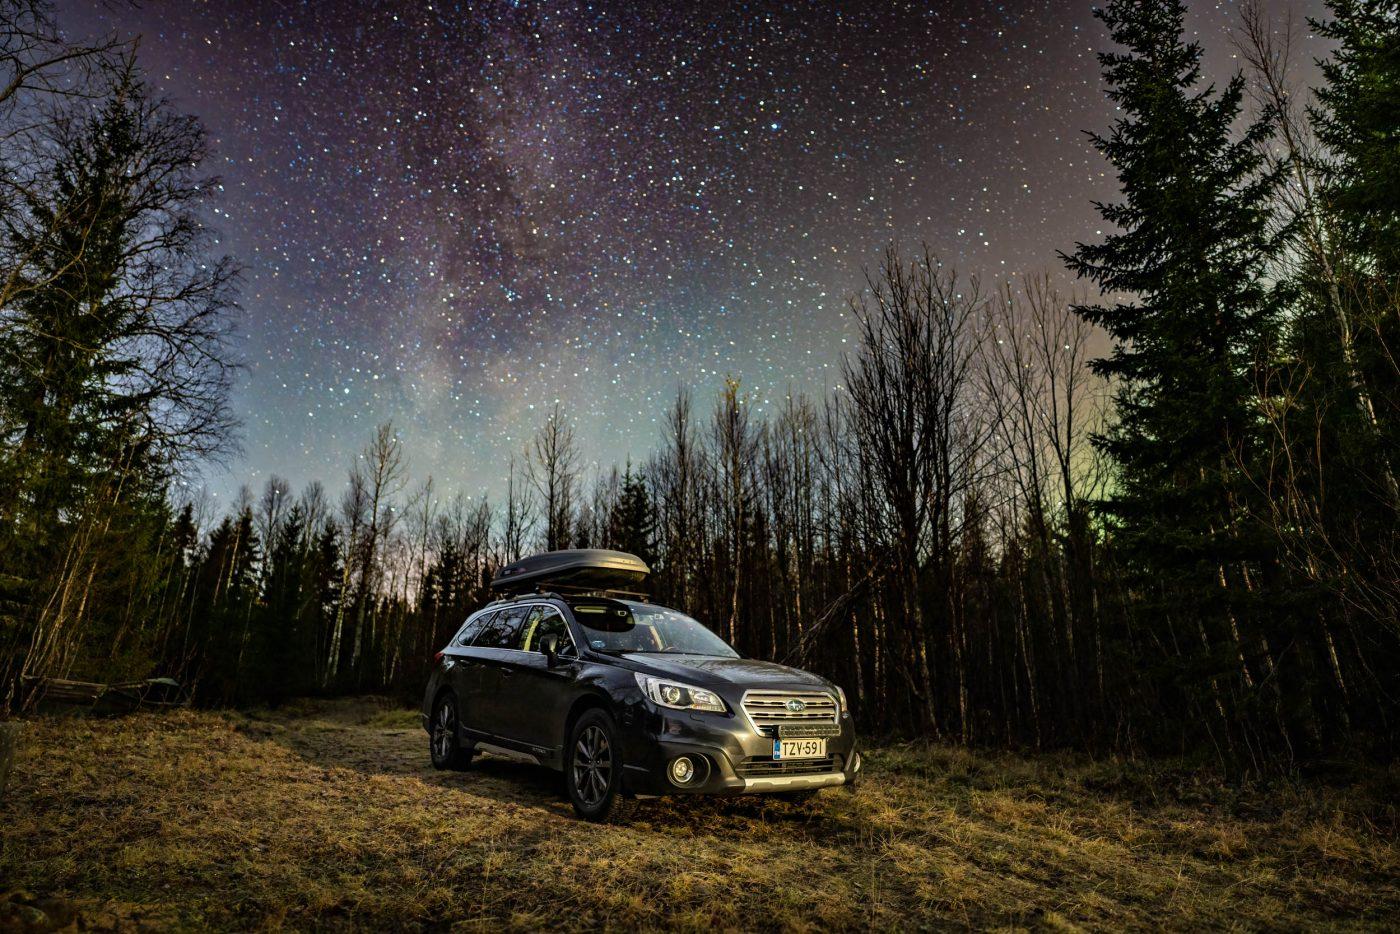 Subaru Outback 2016 under the milky way